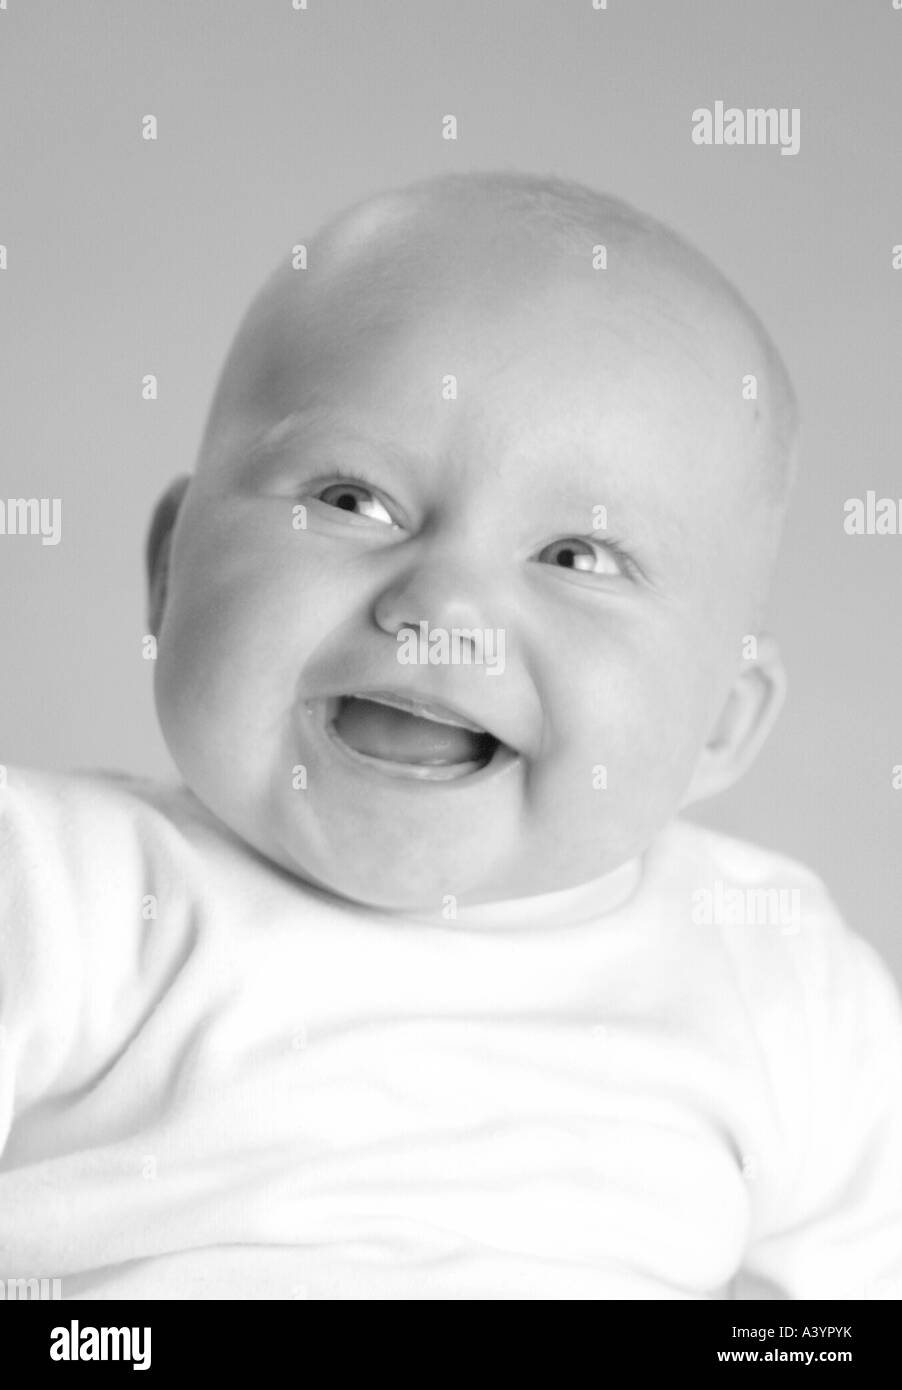 Menschen, Menschen, Menschen (Homo Sapiens Sapiens), Baby lachen Stockfoto